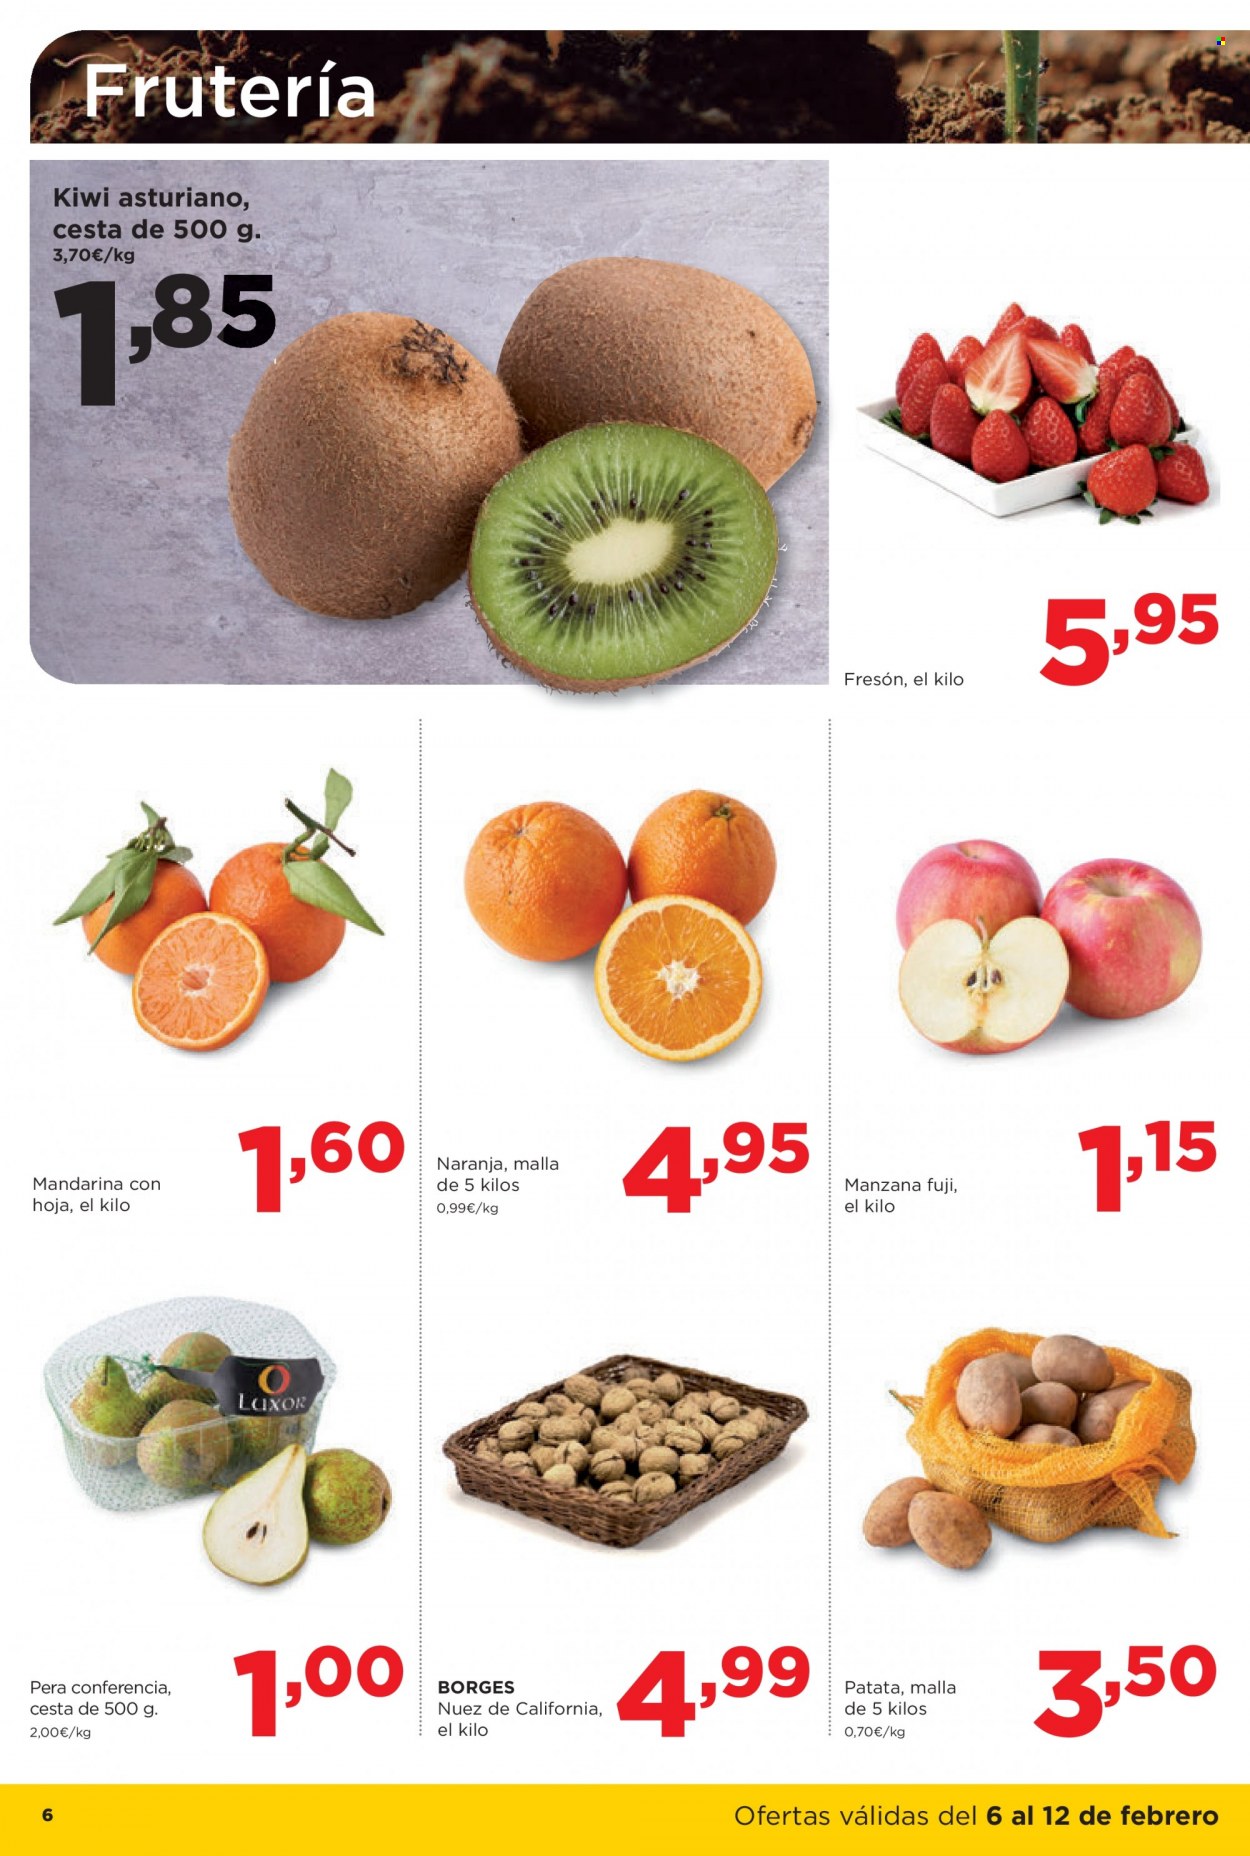 thumbnail - Folleto actual Alimerka - 06/02/23 - 12/02/23 - Ventas - kiwi, fresa, mandarina, naranja, manzanas, pera, nueces, patatas. Página 6.